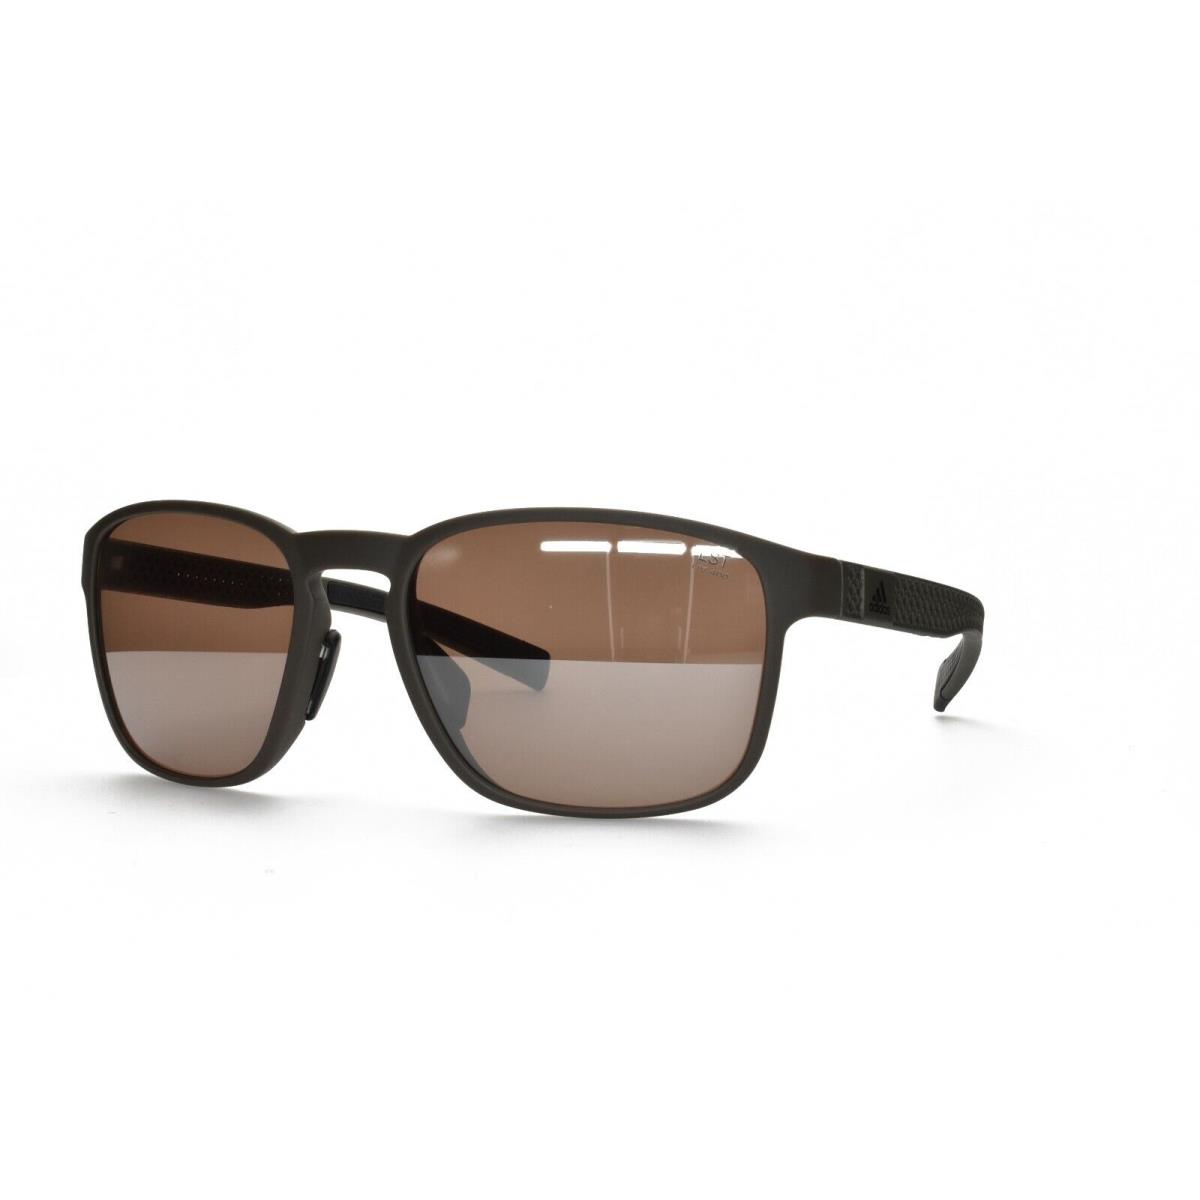 Adidas Sunglasses by Silhouette 3D Print Frame Protean 36 75 5500 56 X Khaki - Frame: , Lens: Brown